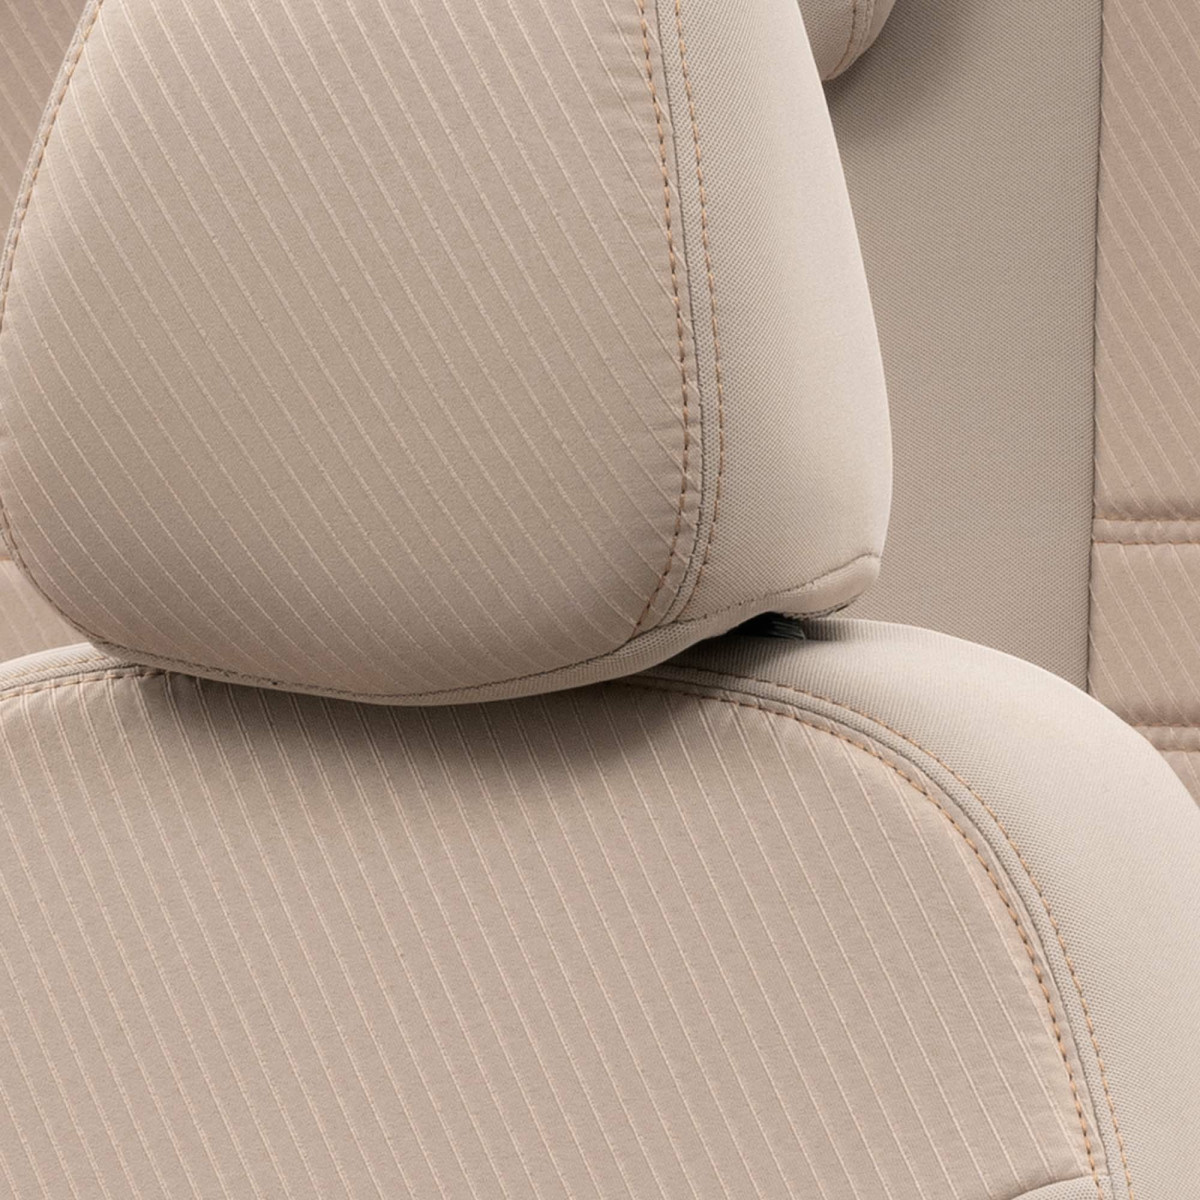 Original sitzbezüge (textil) Audi Q3